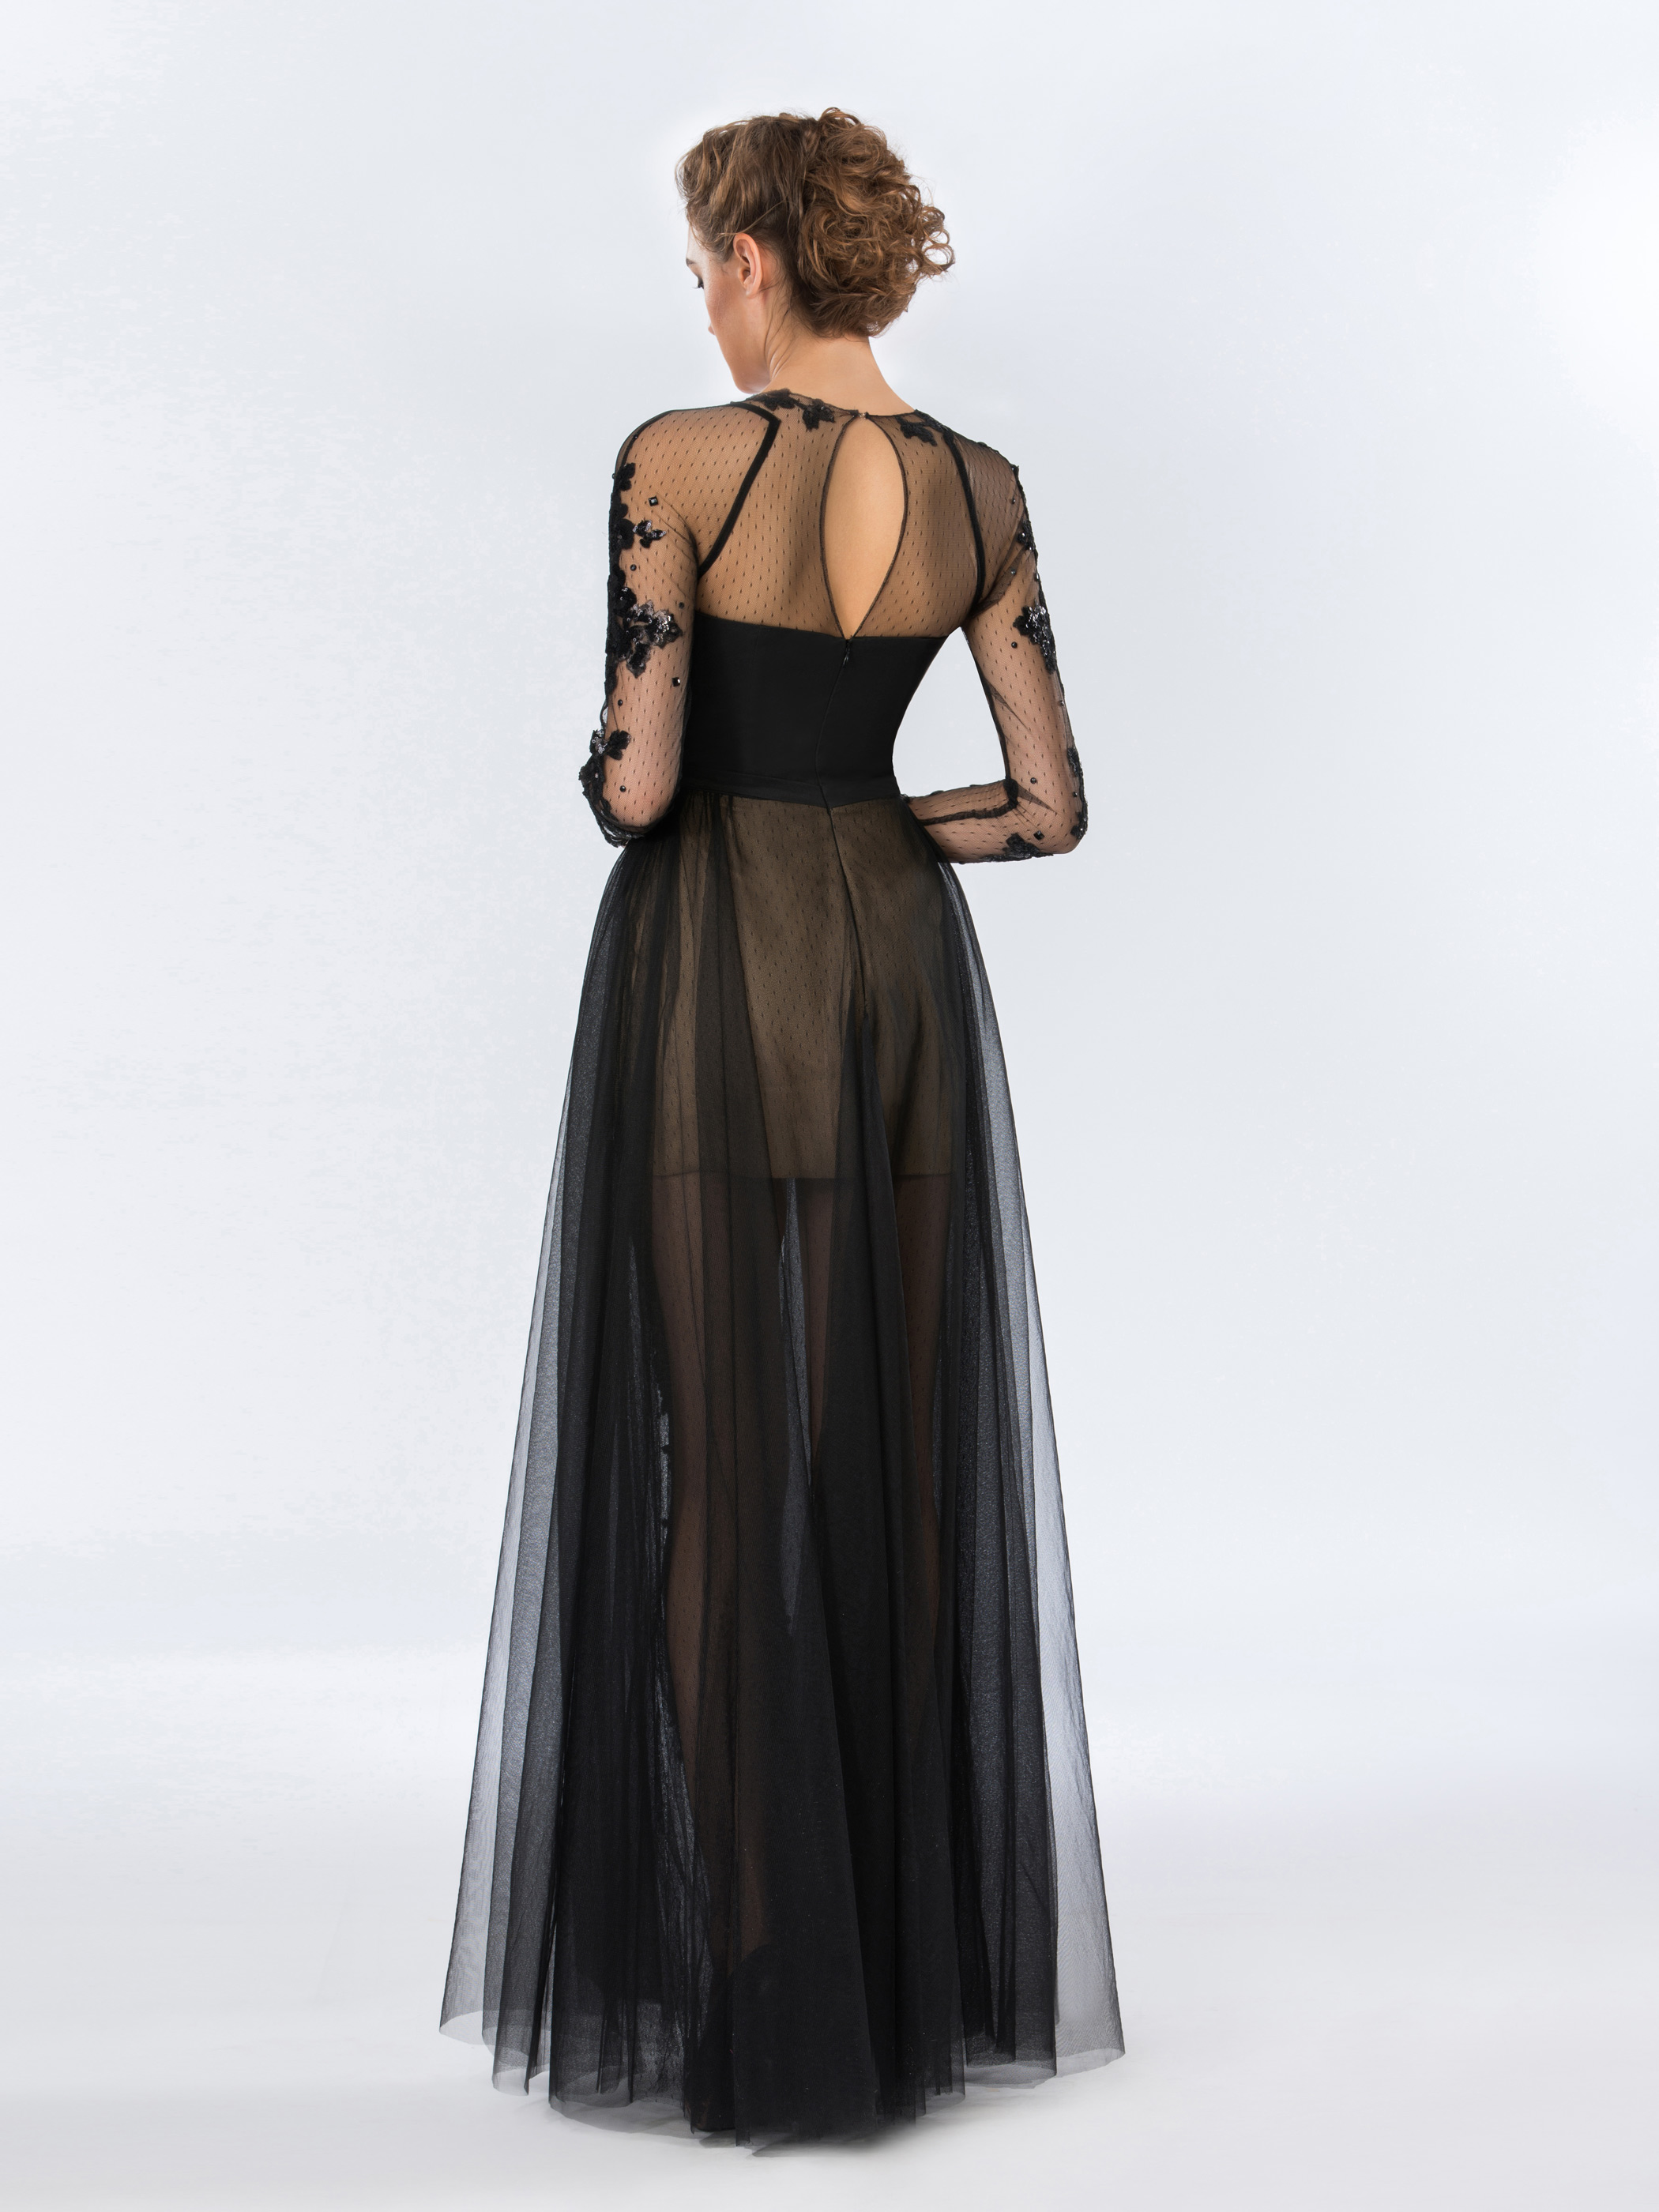 Ericdress Sequins Appliques Long Sleeves Halloween Evening Dress Black Wedding Dresses